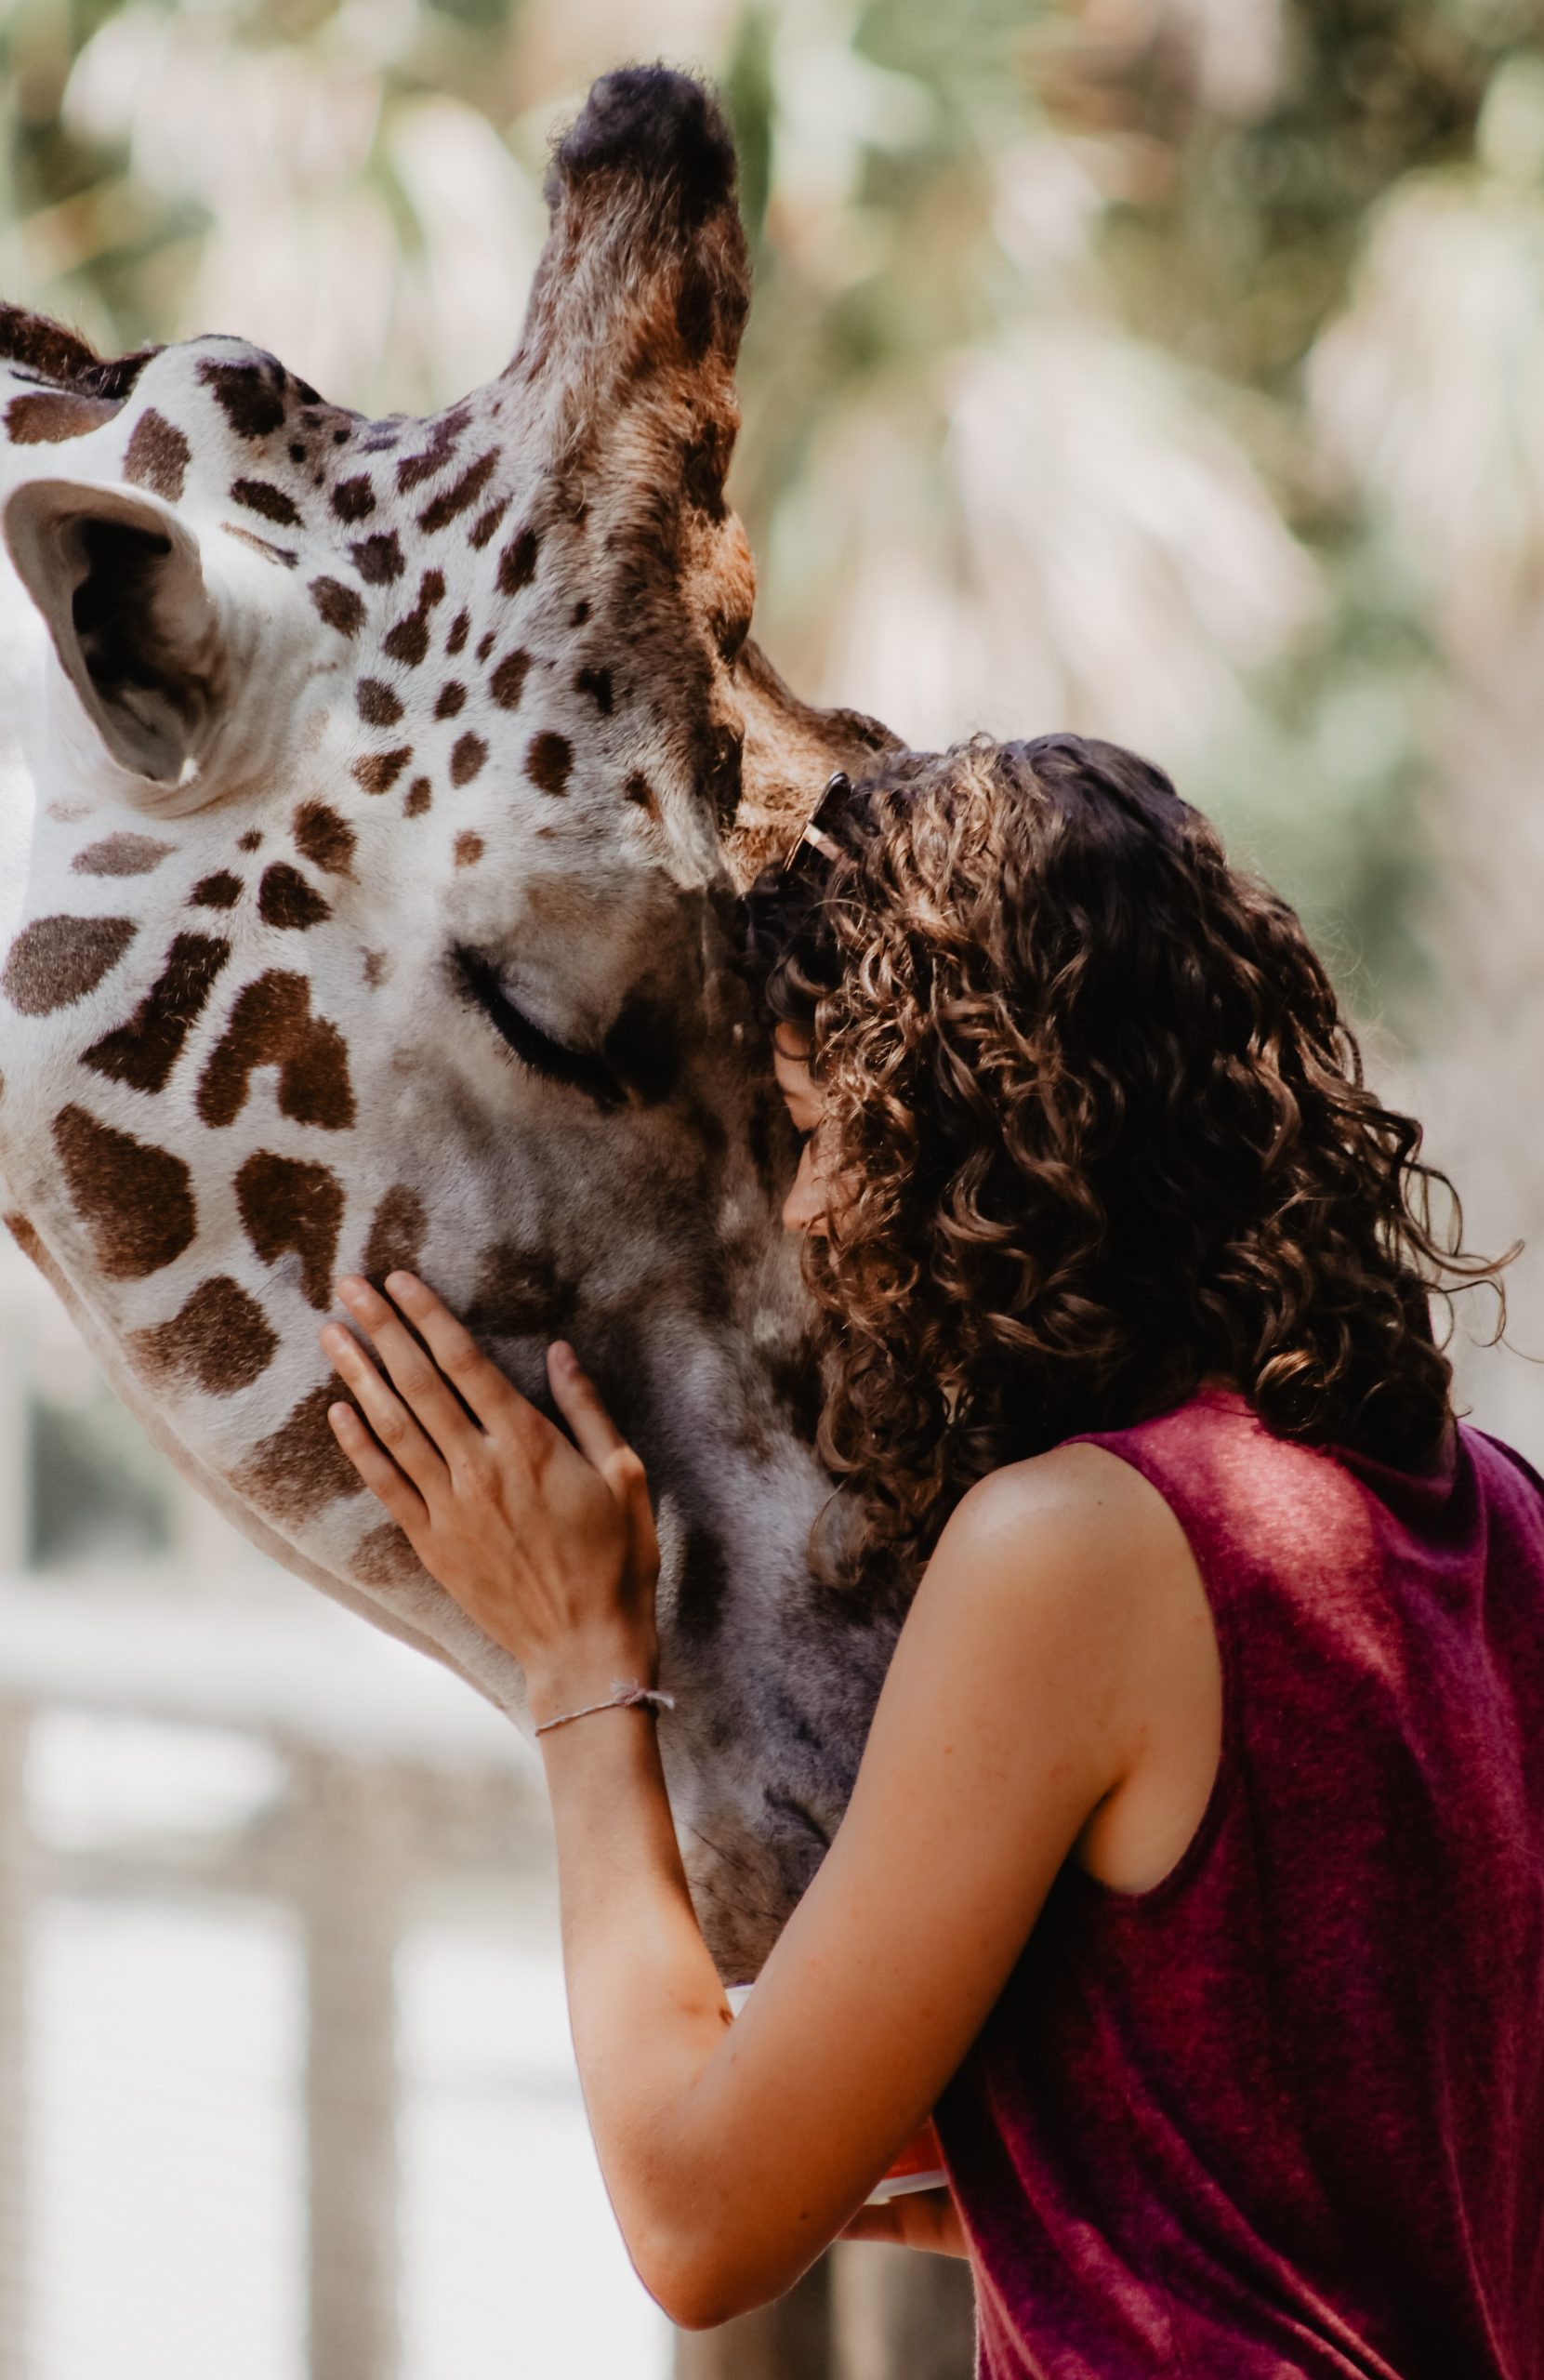 Hugging a giraffe